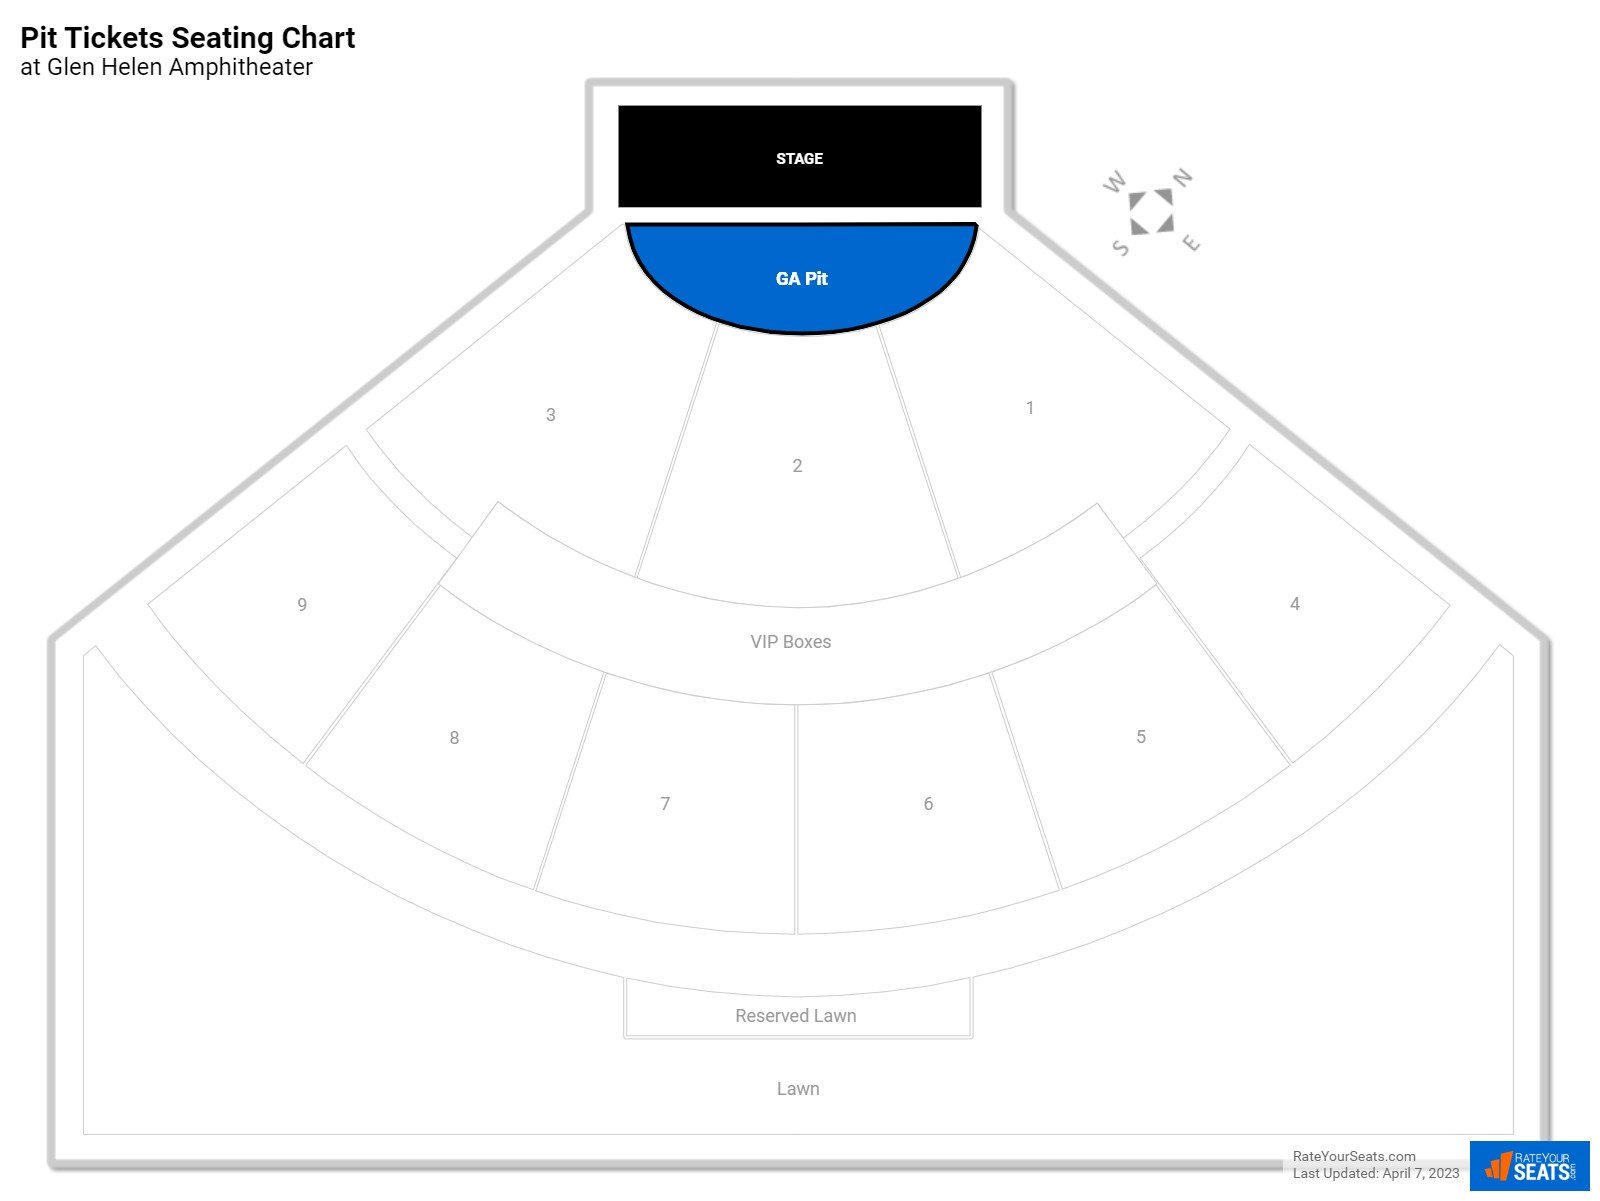 Concert Pit Tickets Seating Chart at Glen Helen Amphitheater